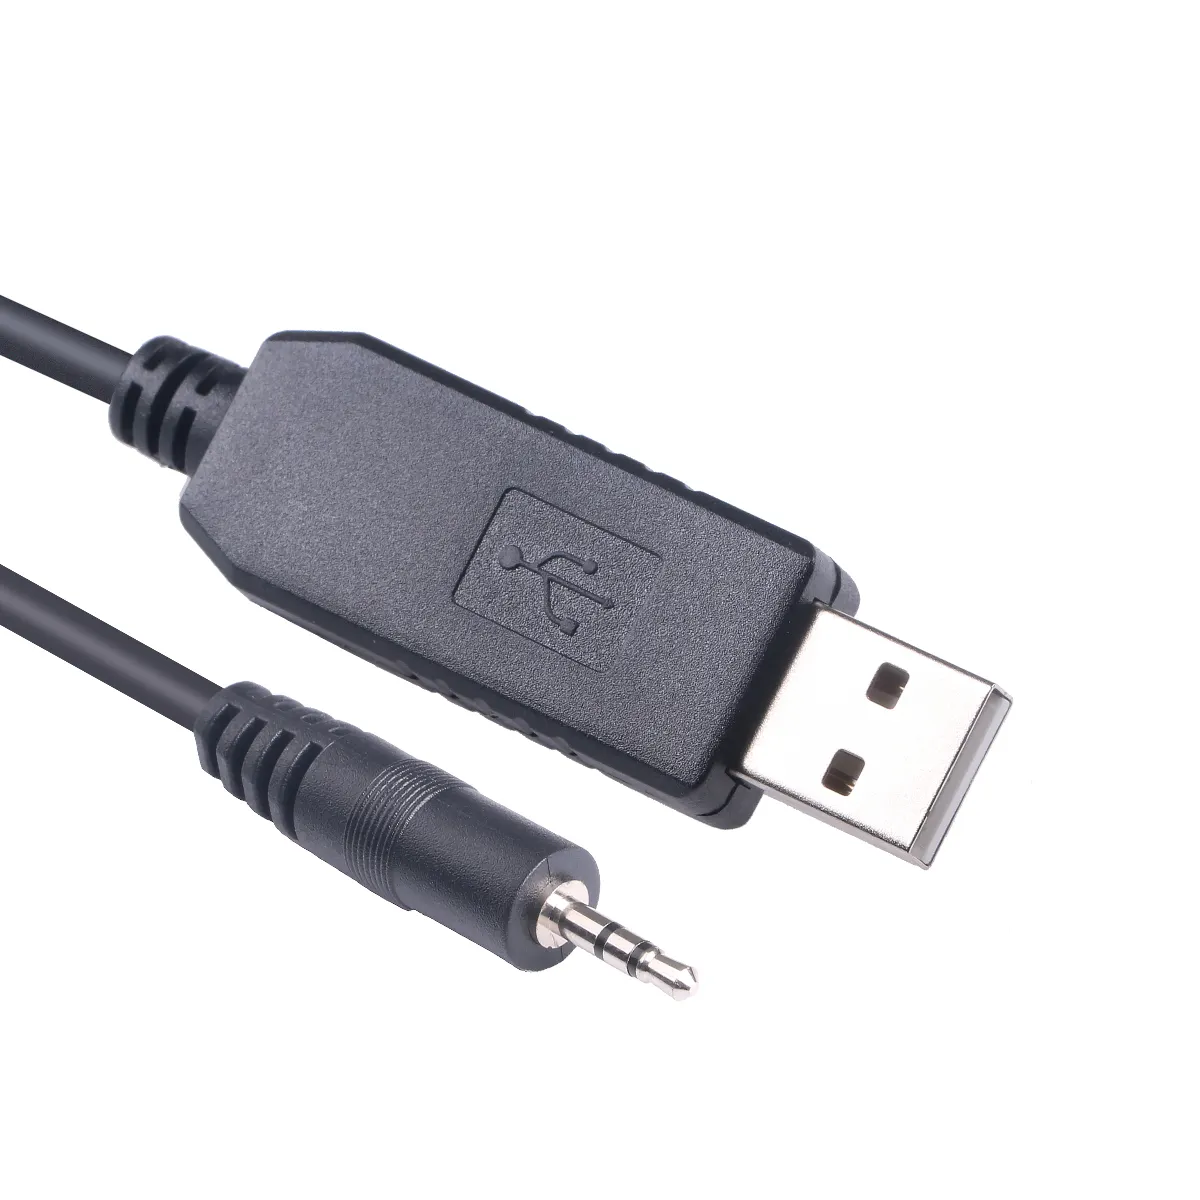 ICOM IC-F21 için USB programlama kablosu F26 F43 2720H 2730 V8 V82,USB 2.5mm ses jakı seri kablo